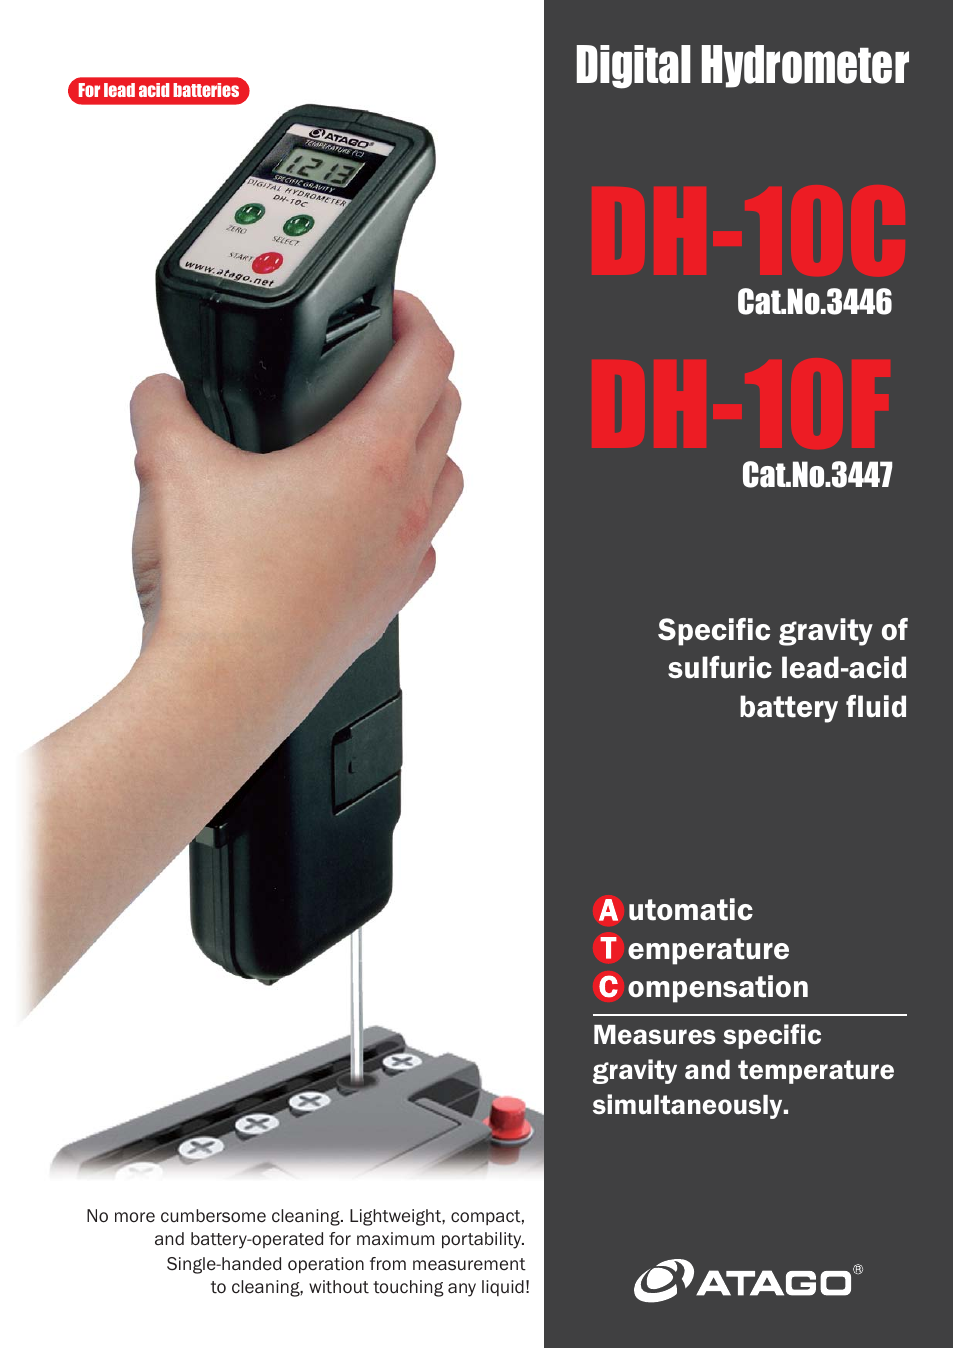 Nova-Tech Atago DH-10C - DH-10F Digital Hyrdometer User Manual | 2 pages